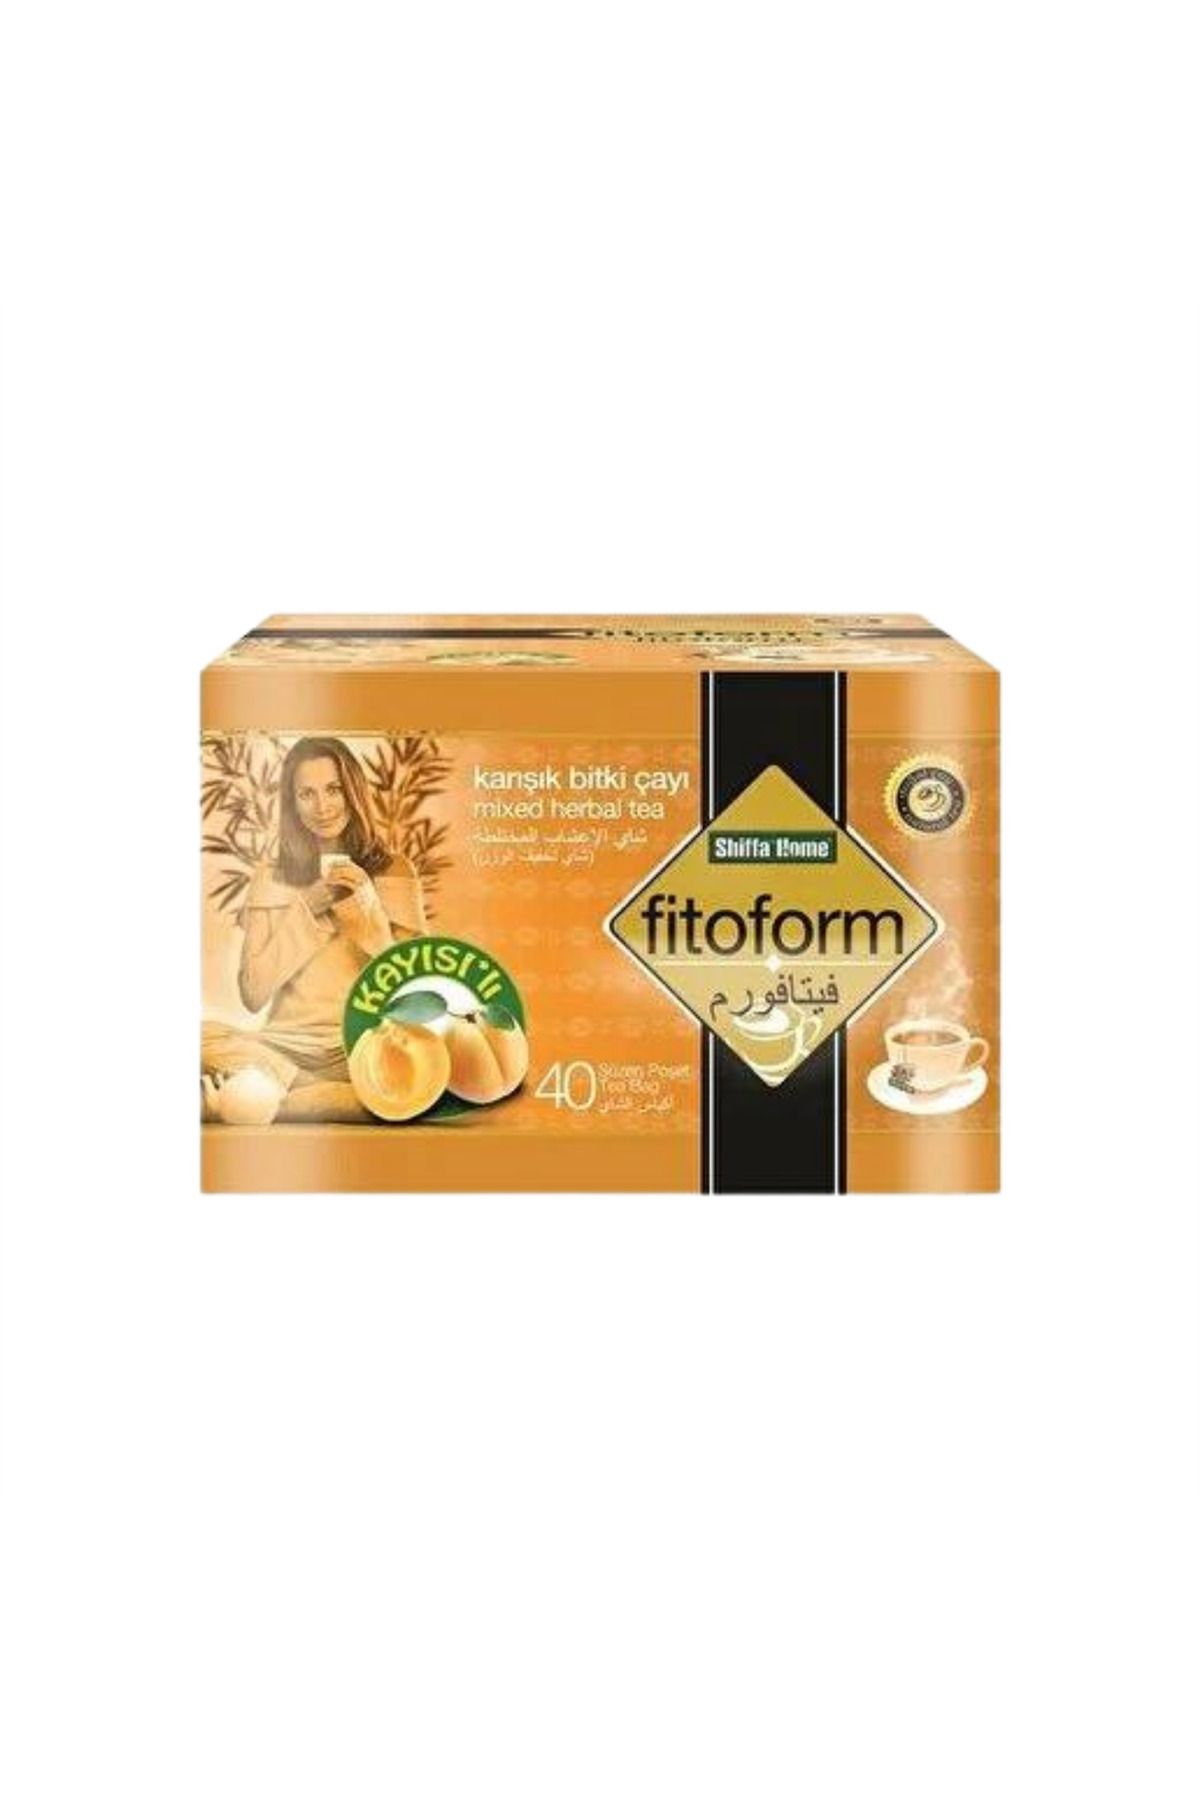 Shiffa Home Karışık Bitki Çayı Fitoform 40 Lı